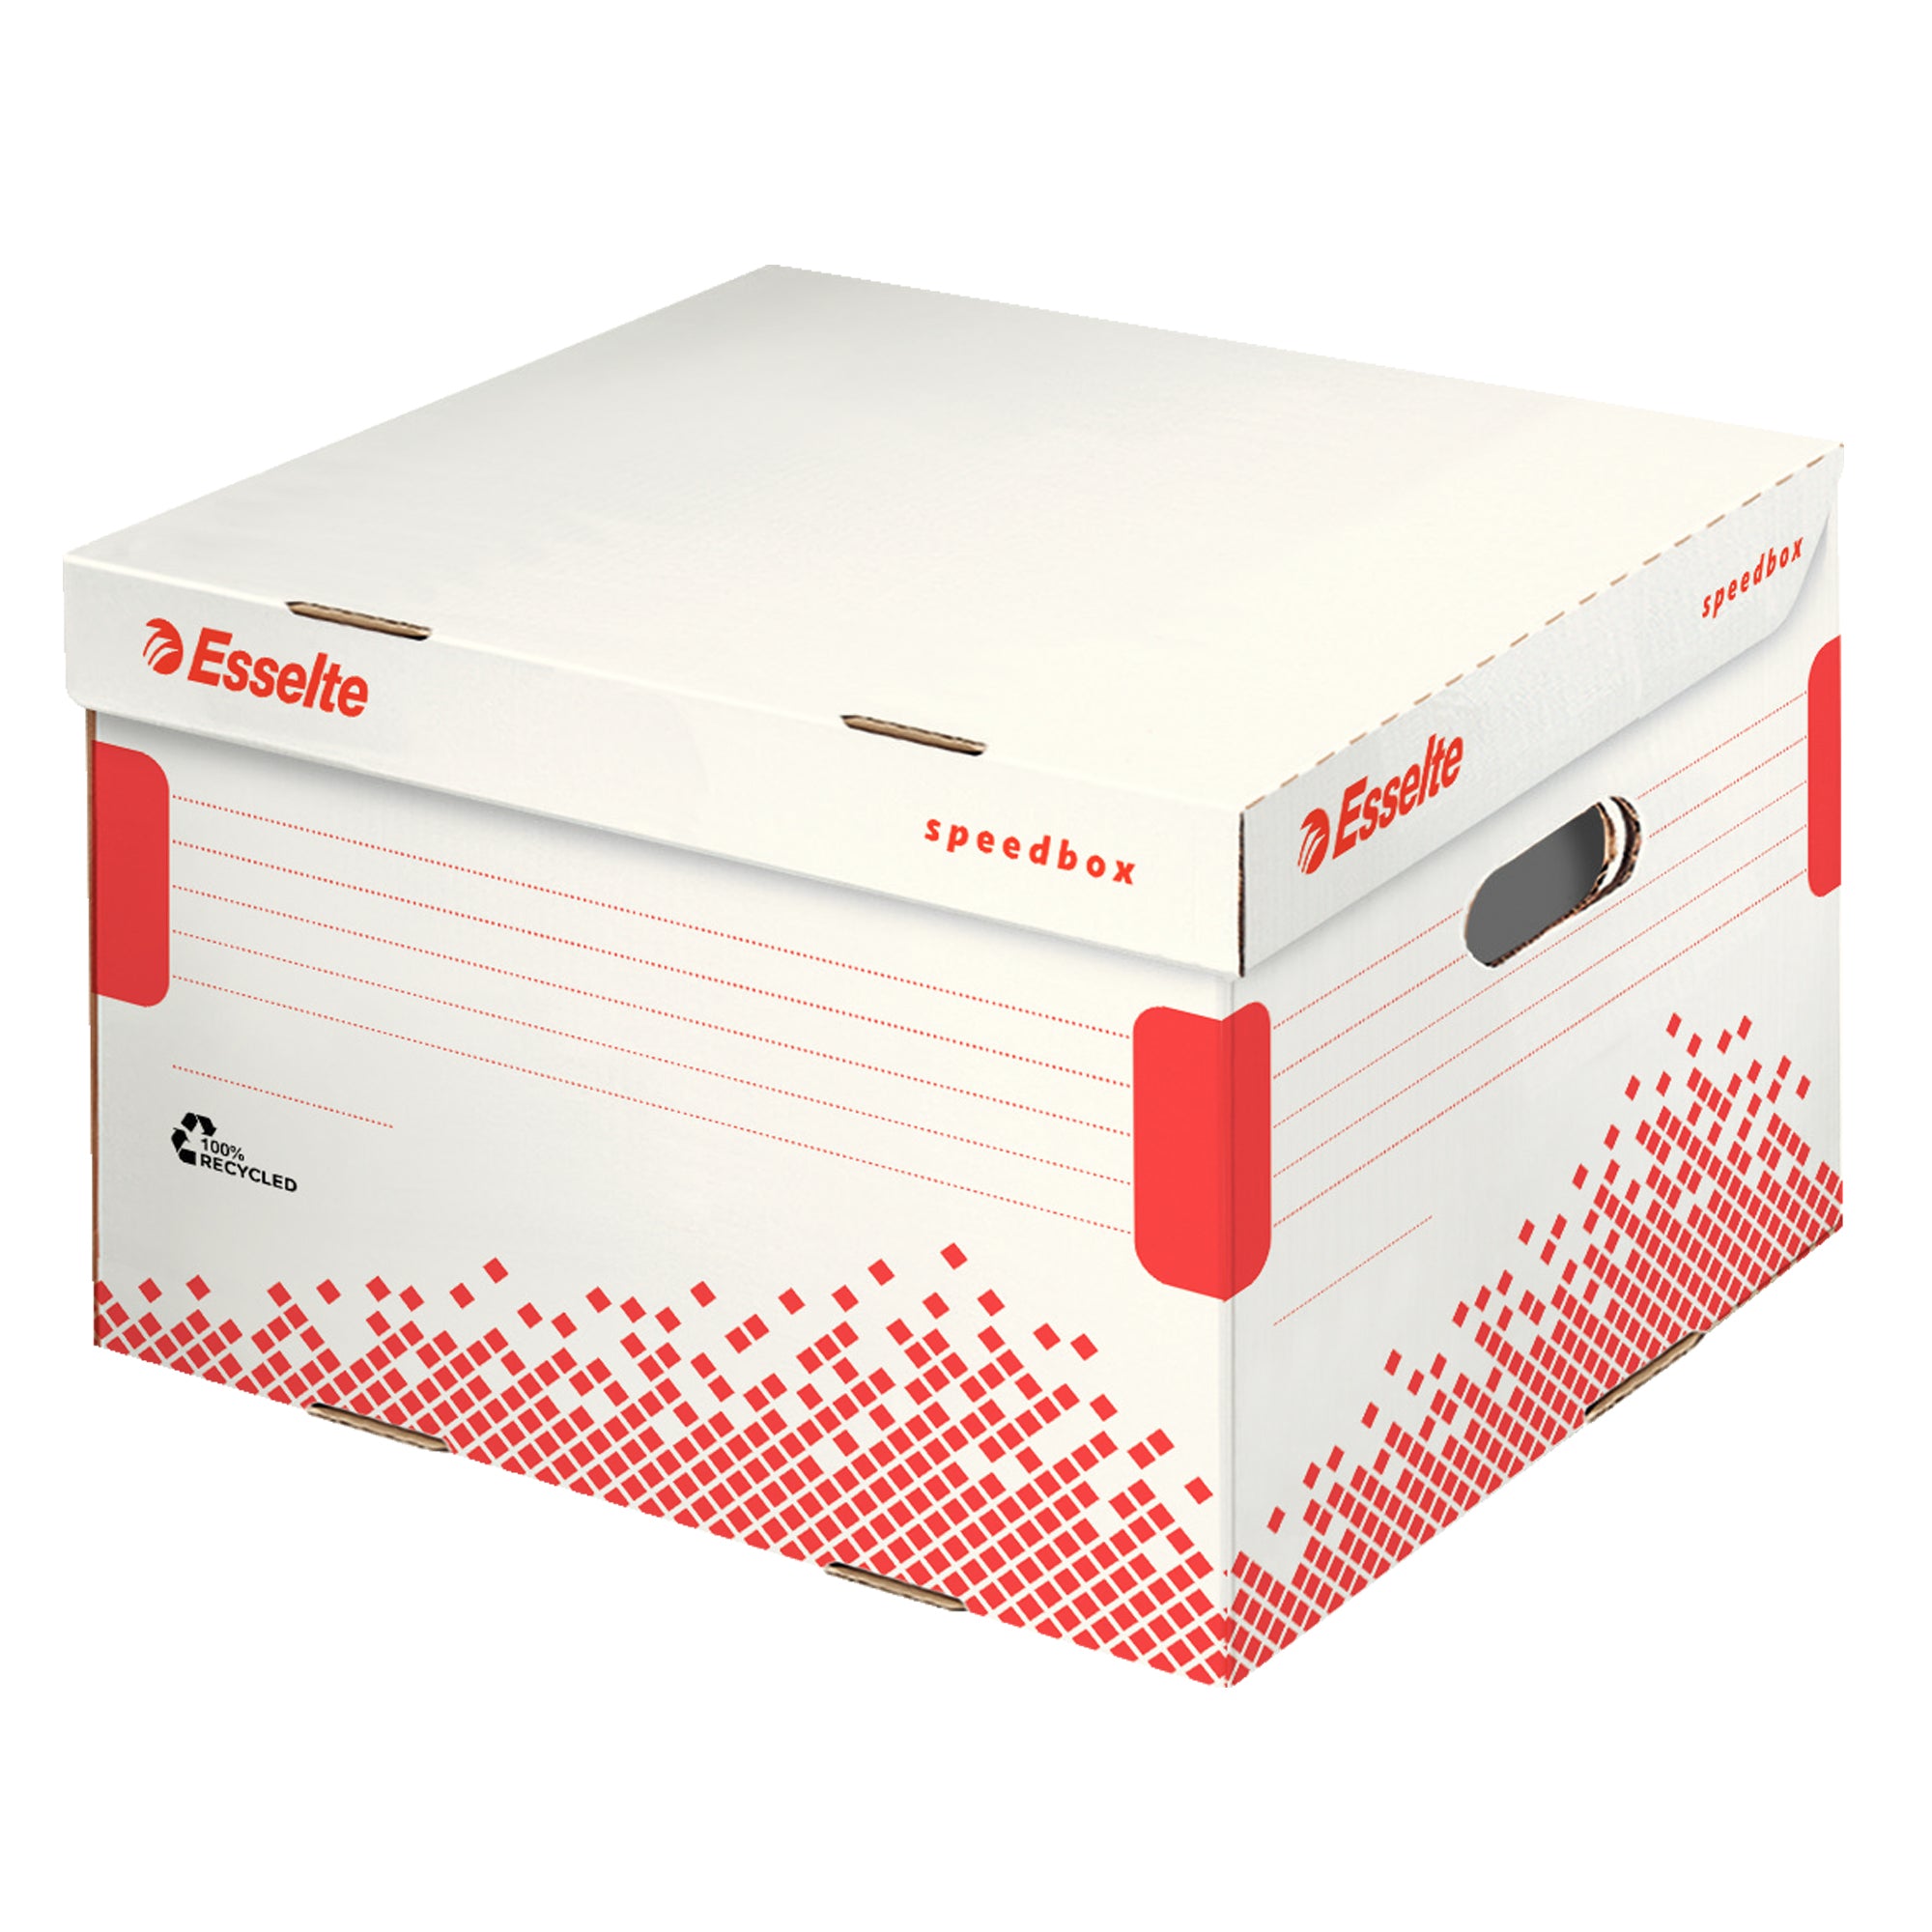 esselte-scatola-container-speedbox-large-364x433x263mm